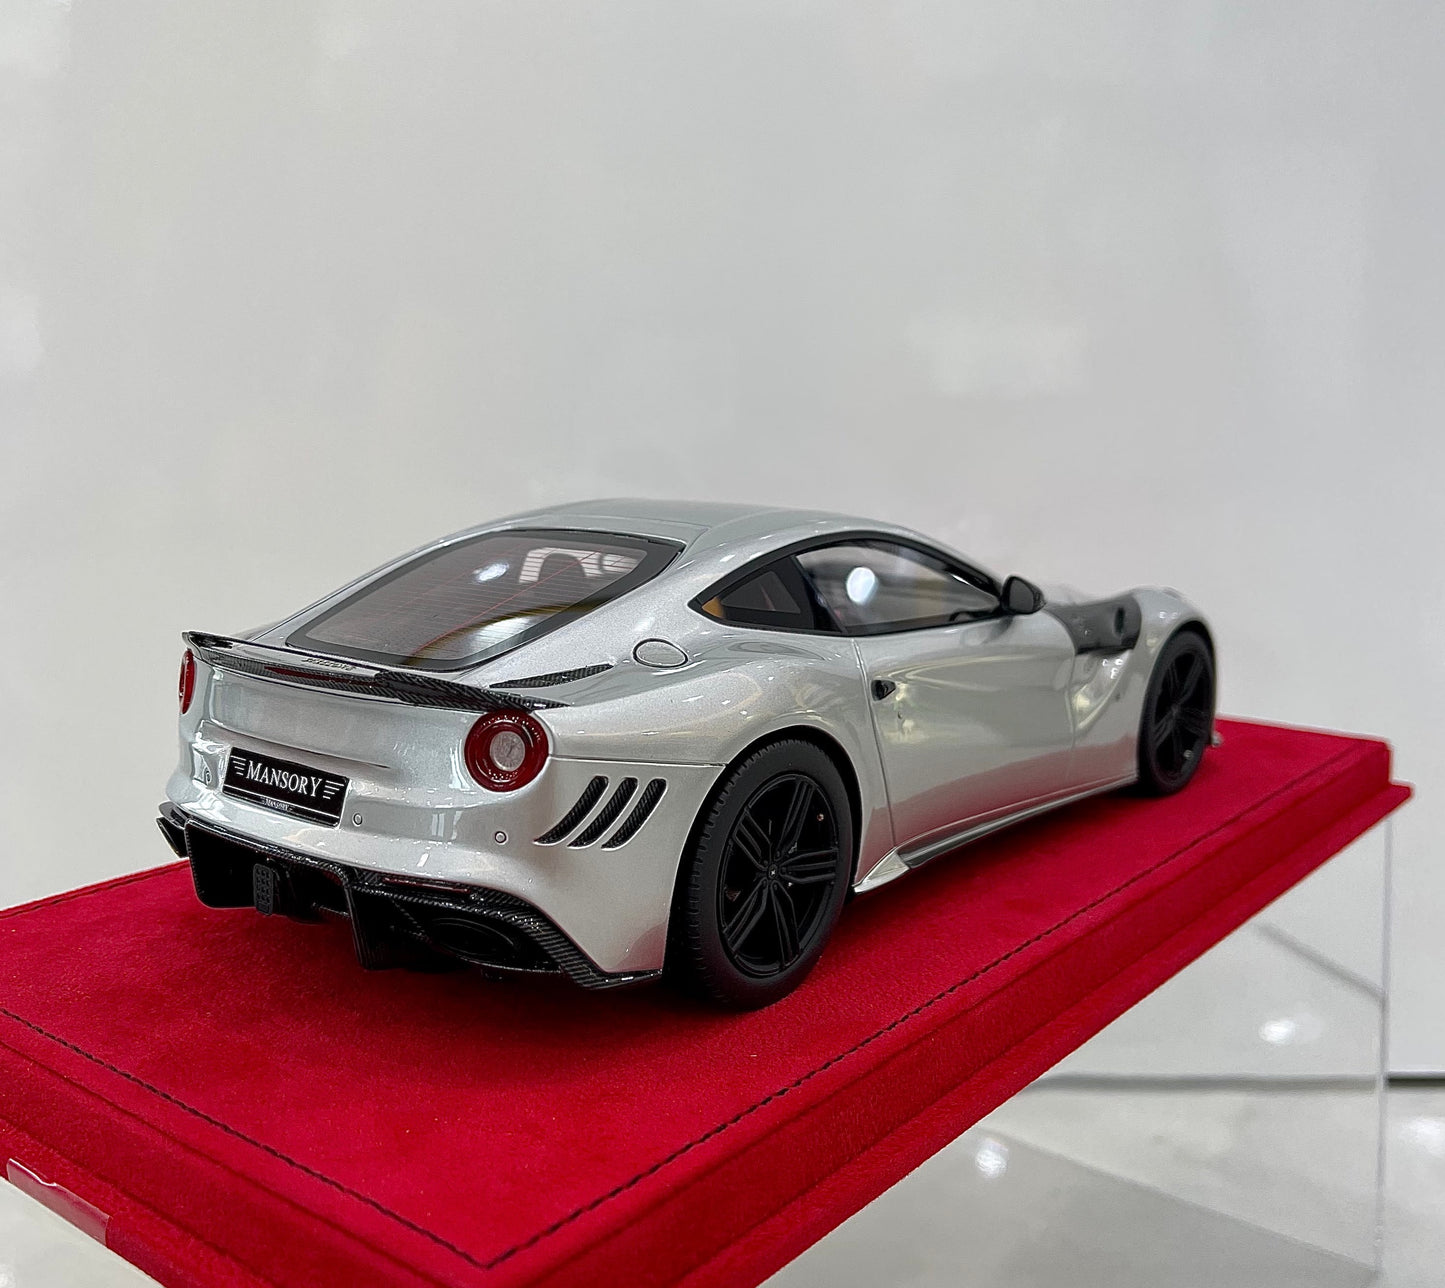 Ferrari f12 1:18 scale model now online